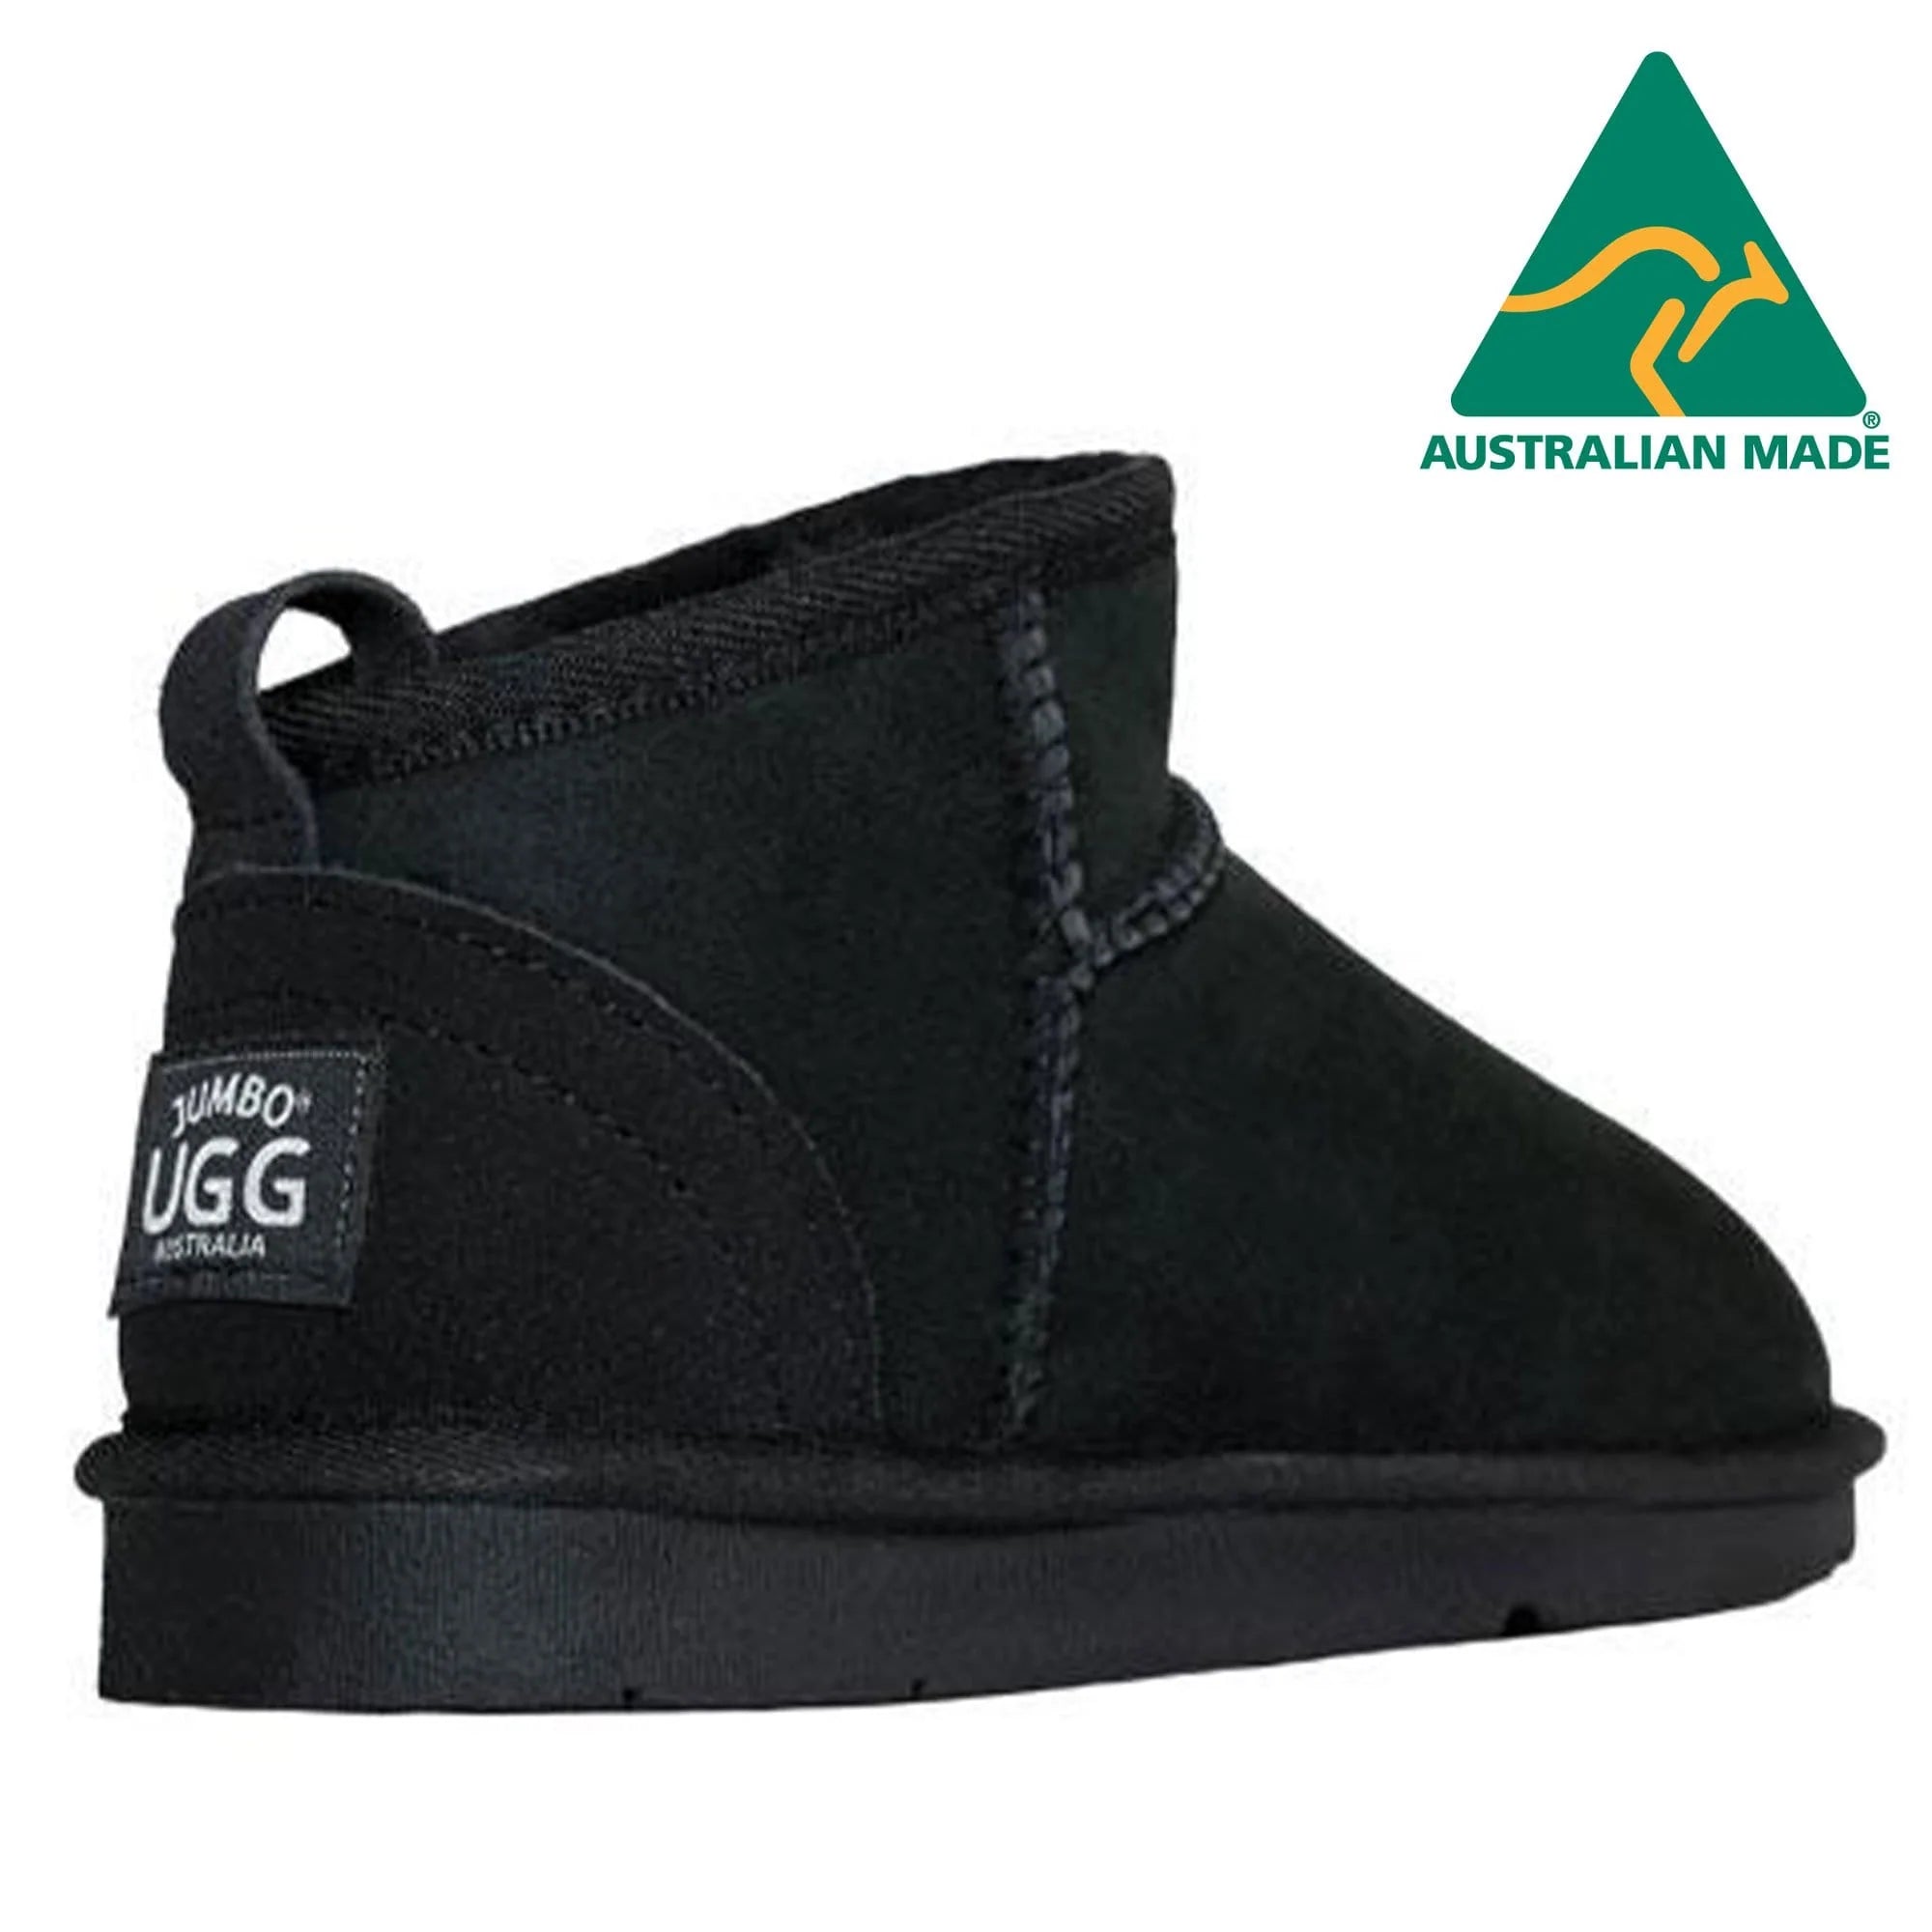 Ugg Boots - UGG Premium Mini Pote Boots - Original UGG Australia Classic